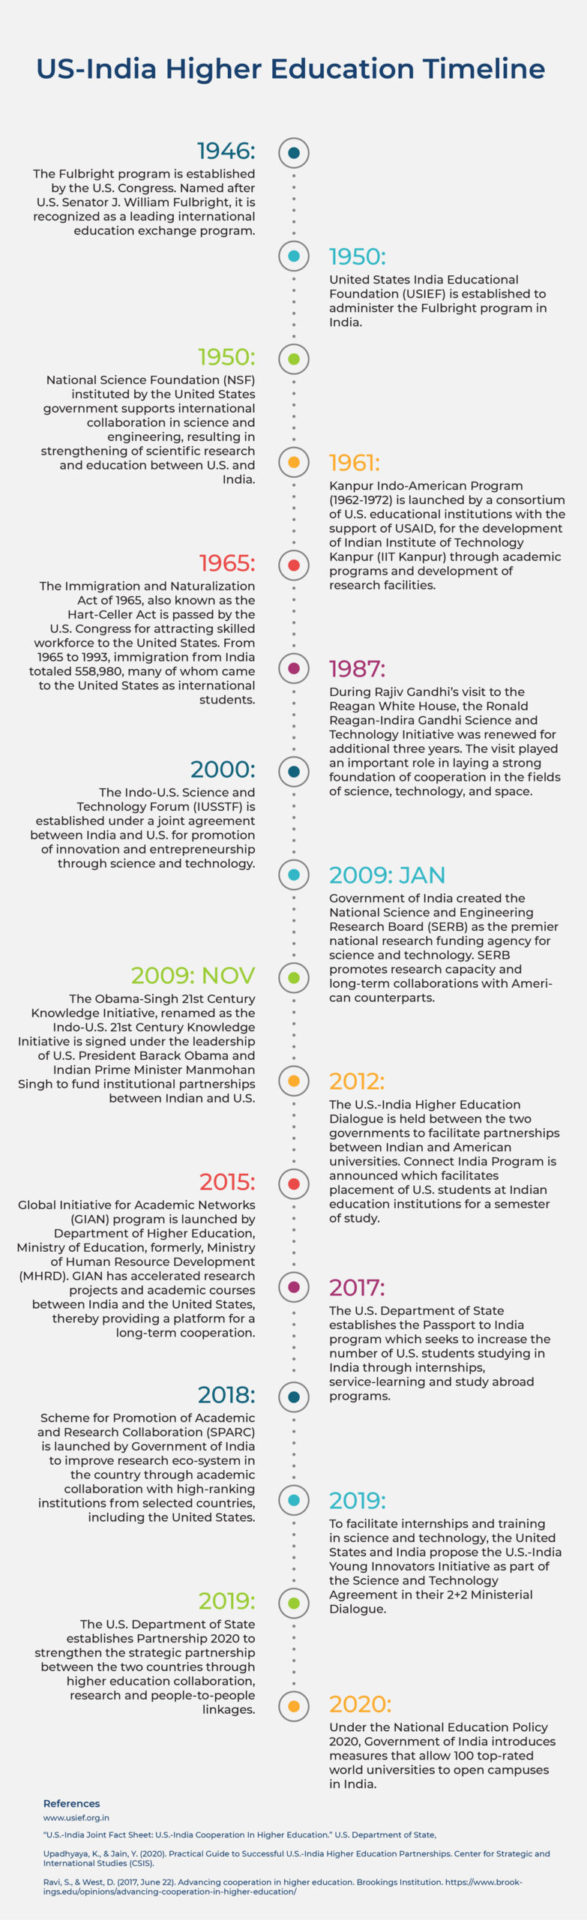 US-India Higher Education Timeline